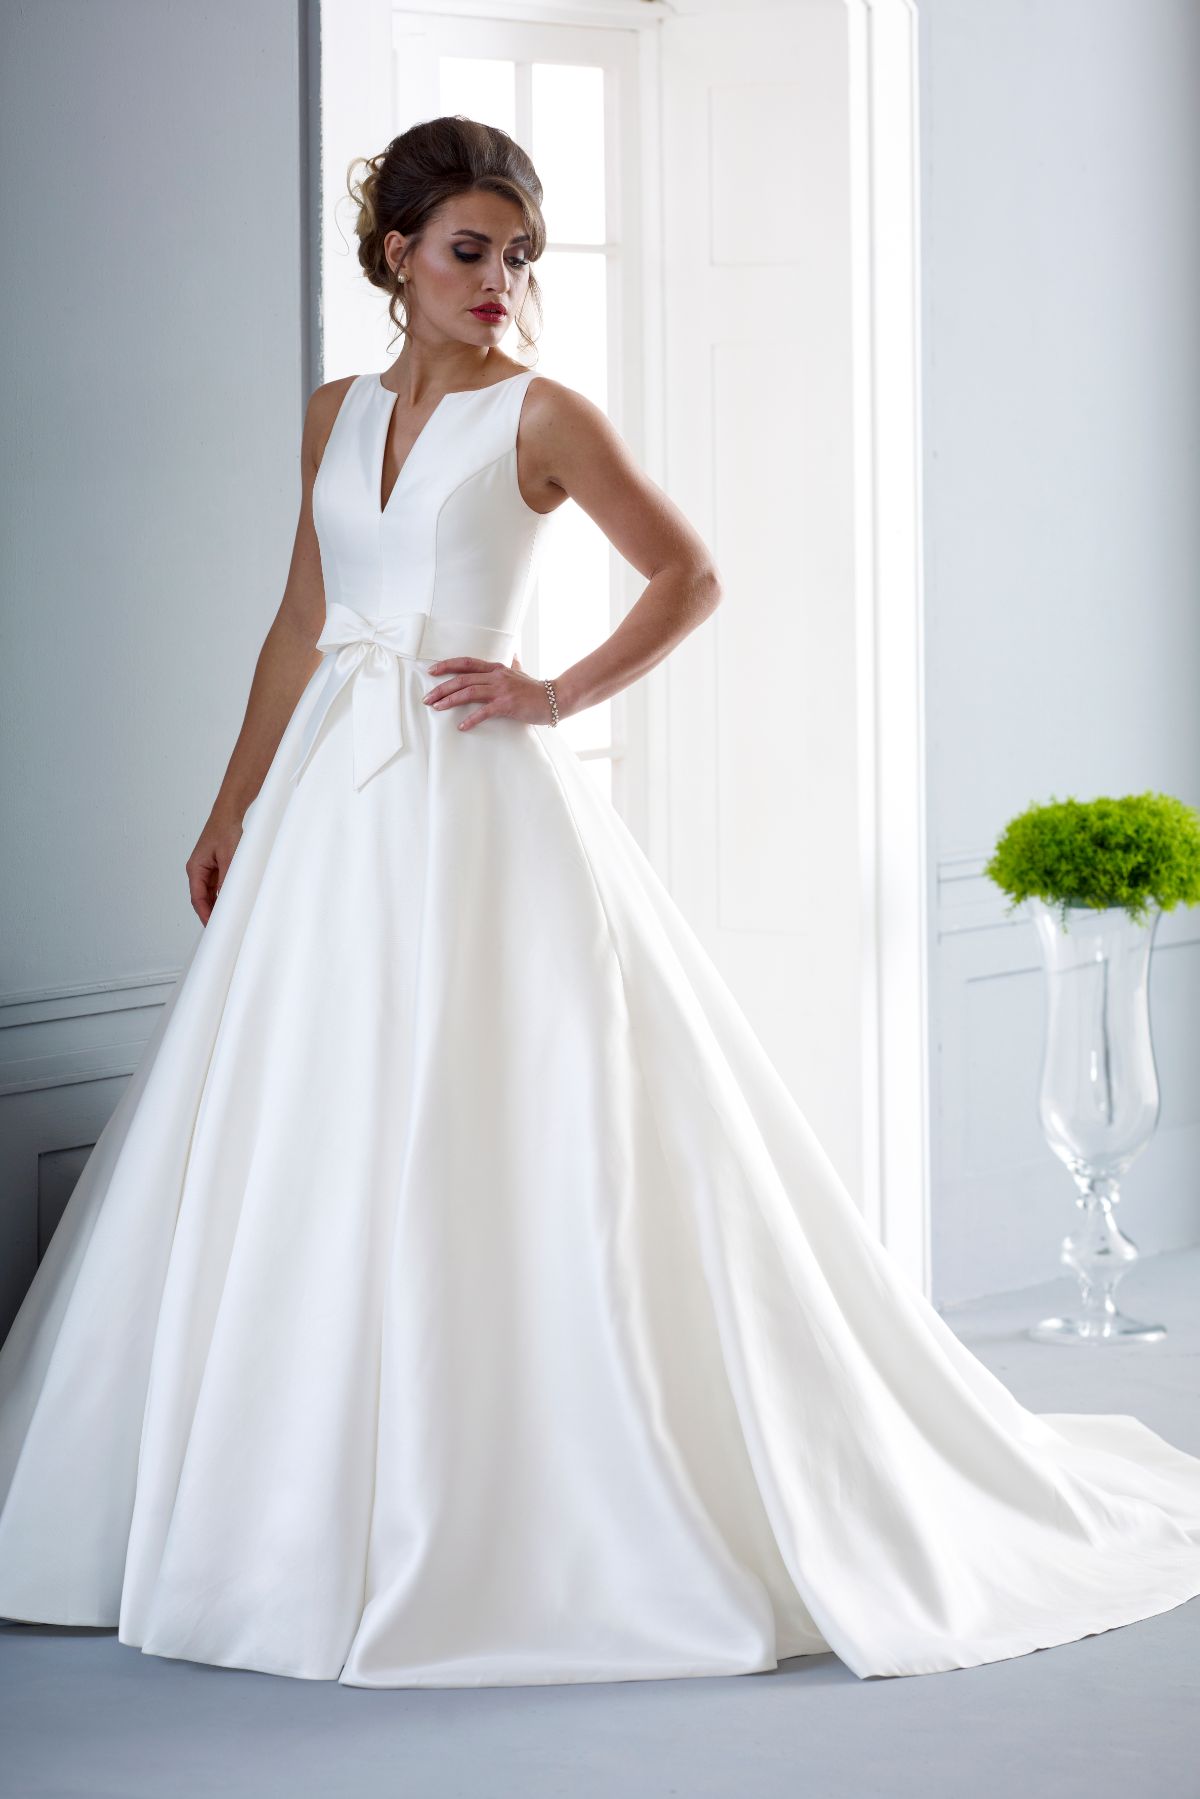 Best Dress 2 Impress Bridal-Image-100